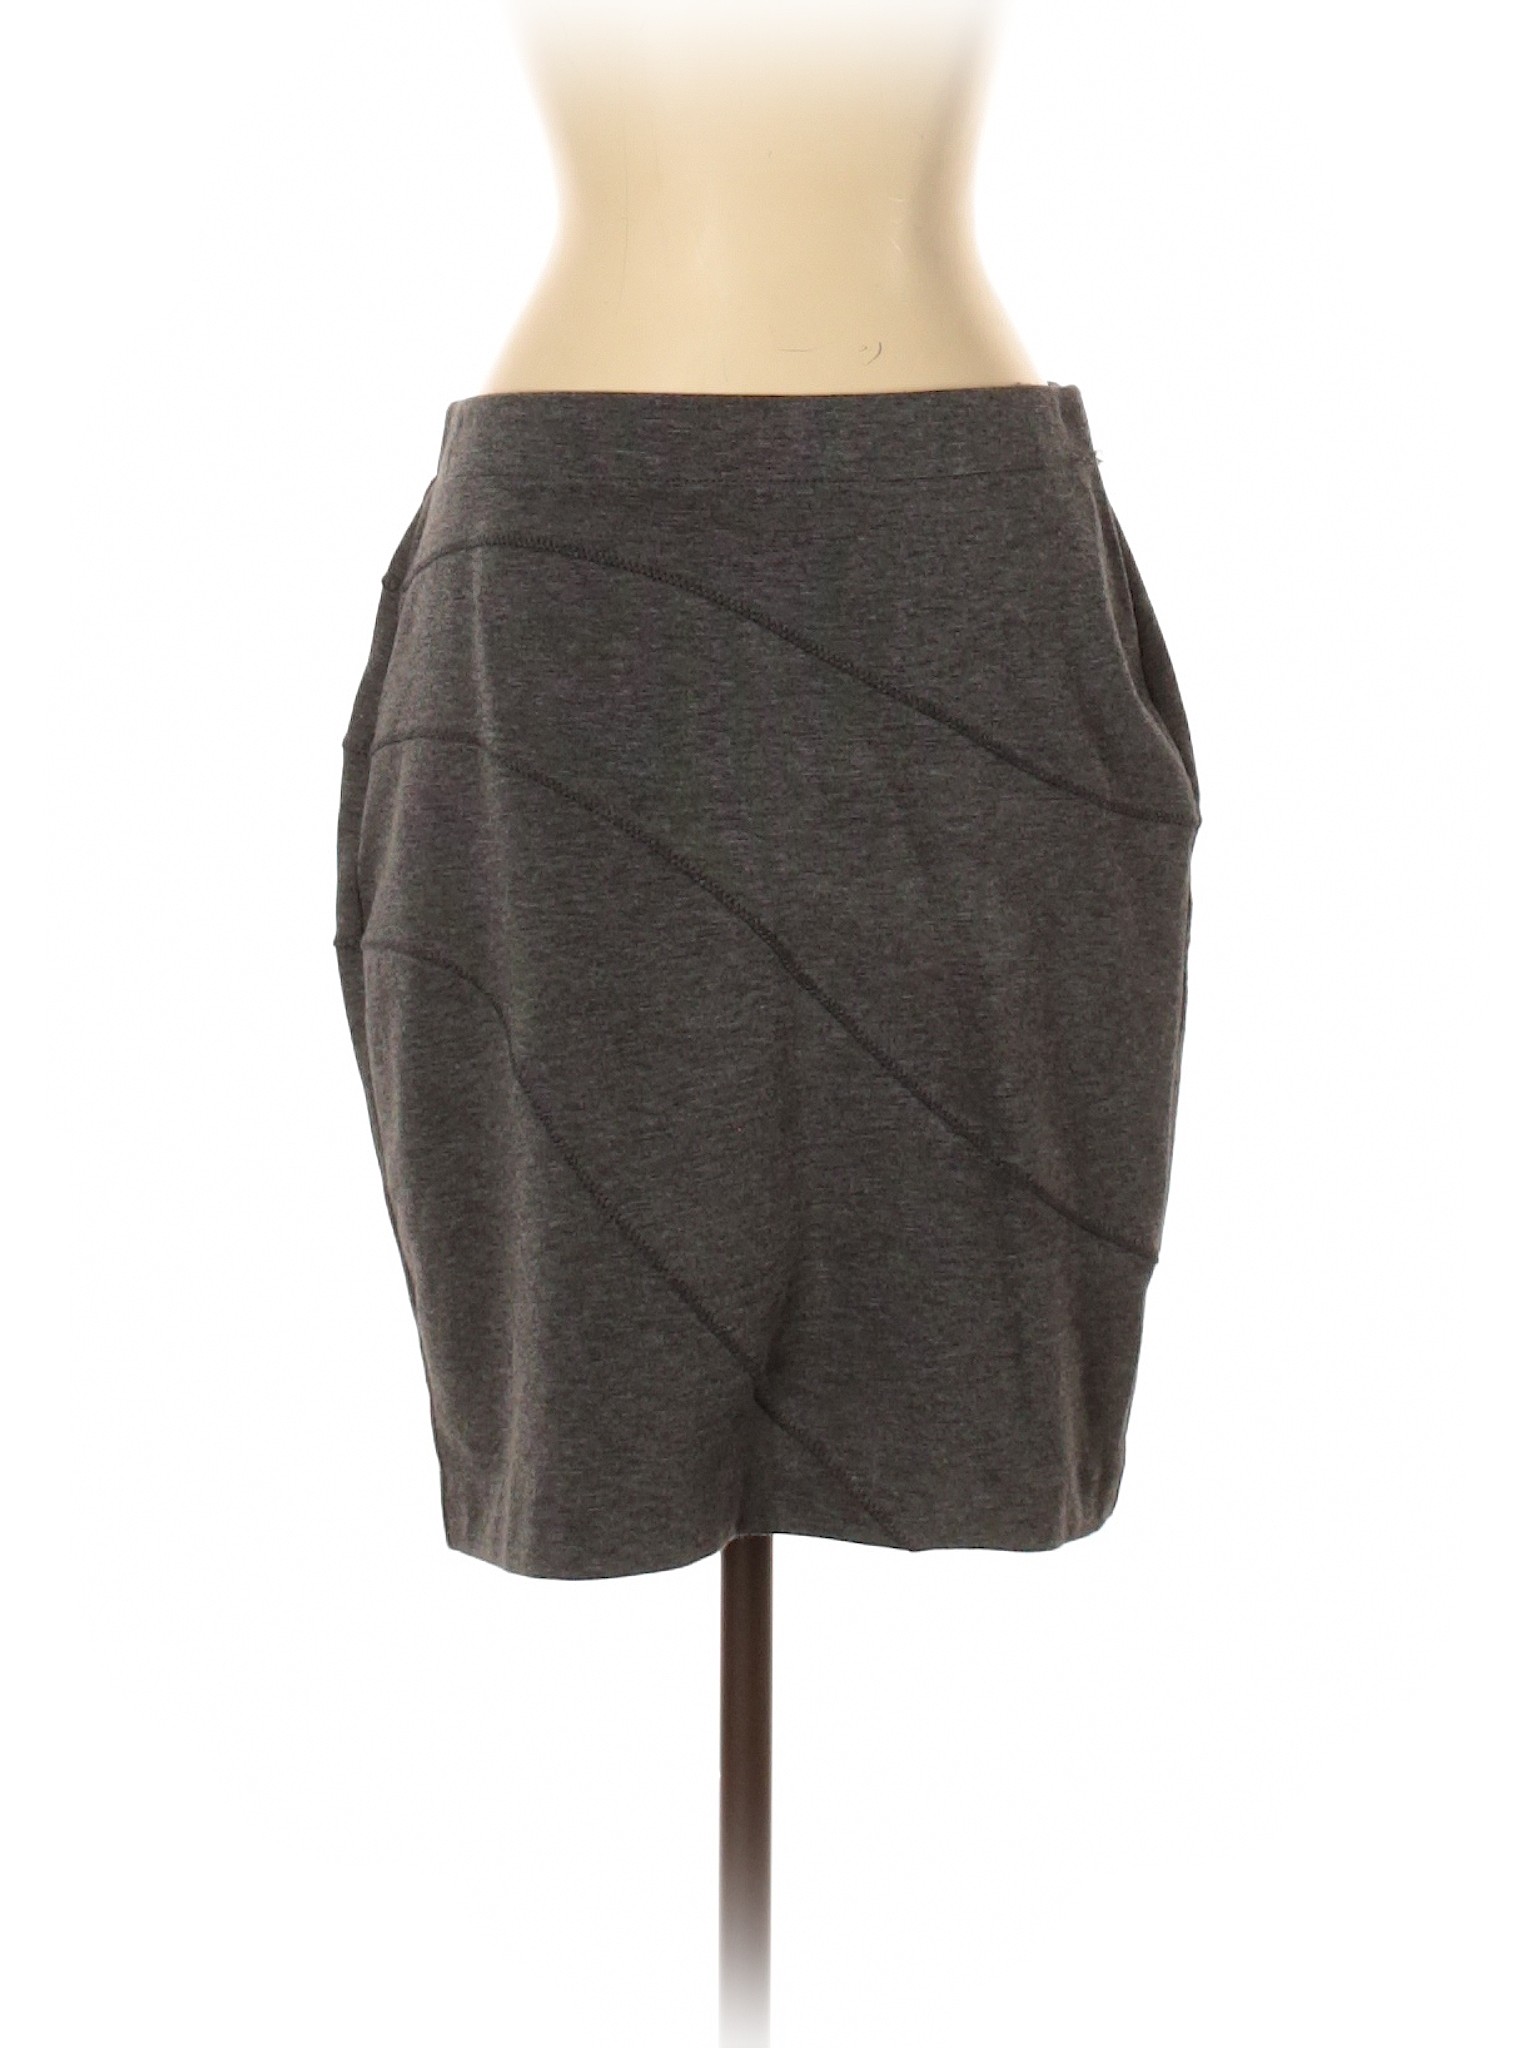 Simply Vera Vera Wang Women Gray Casual Skirt S | eBay